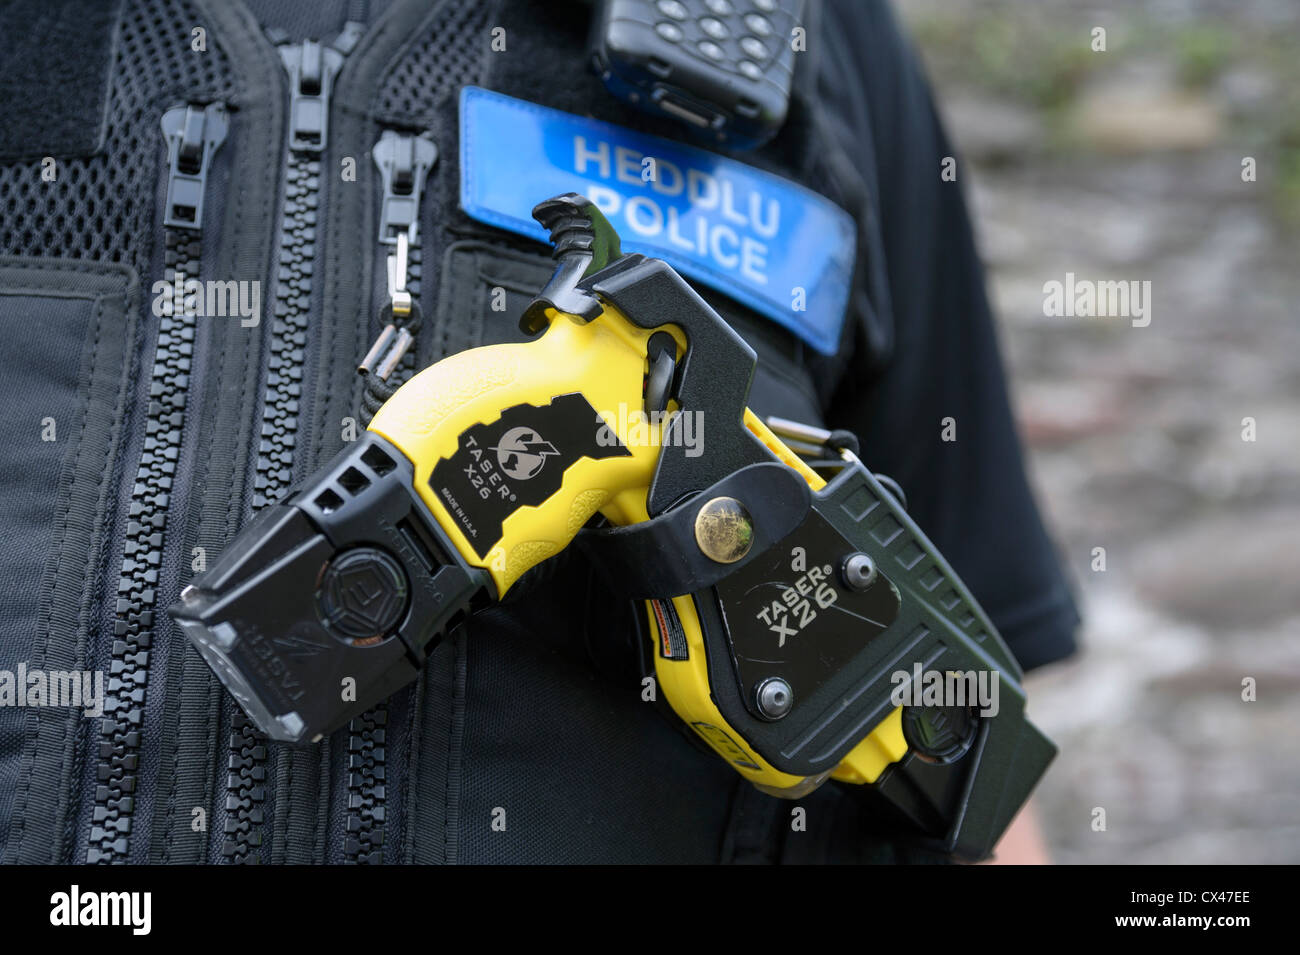 Police taser x26 stun gun, Abergavenny, Wales, UK. Stock Photo